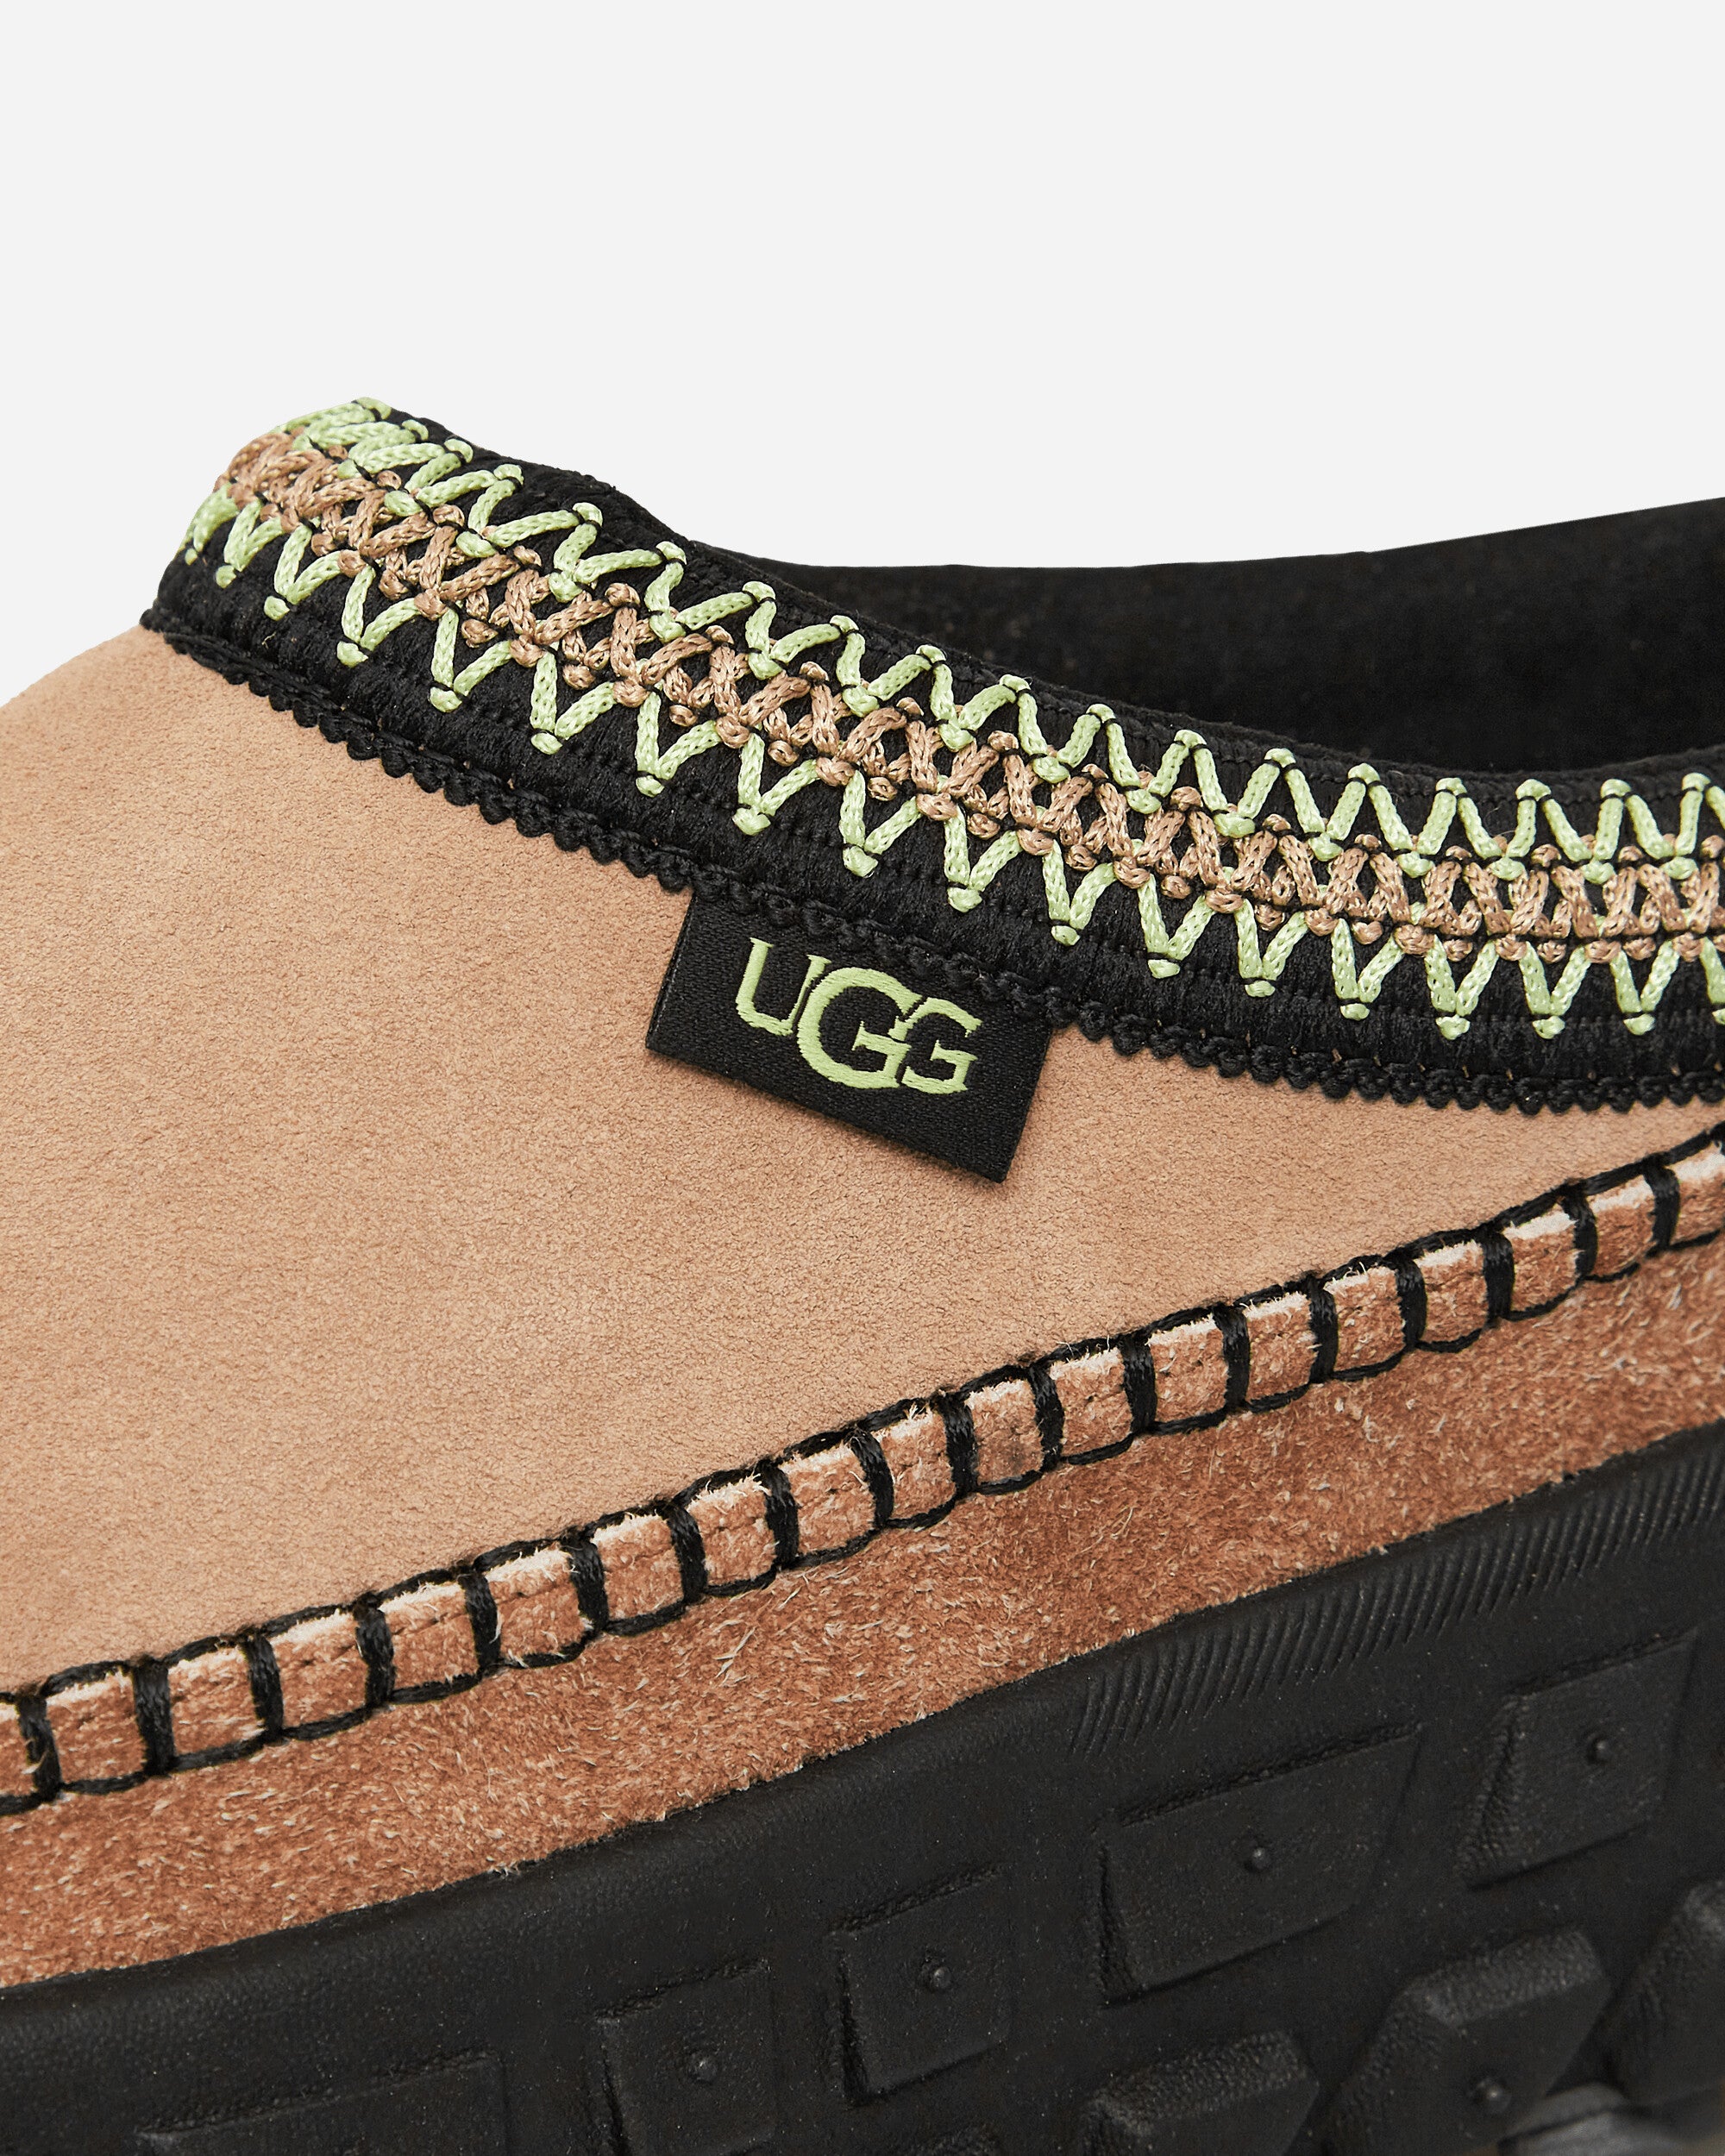 UGG Venture Daze Sand/Black Classic Shoes Sandals and Mules 1154530 SNDB